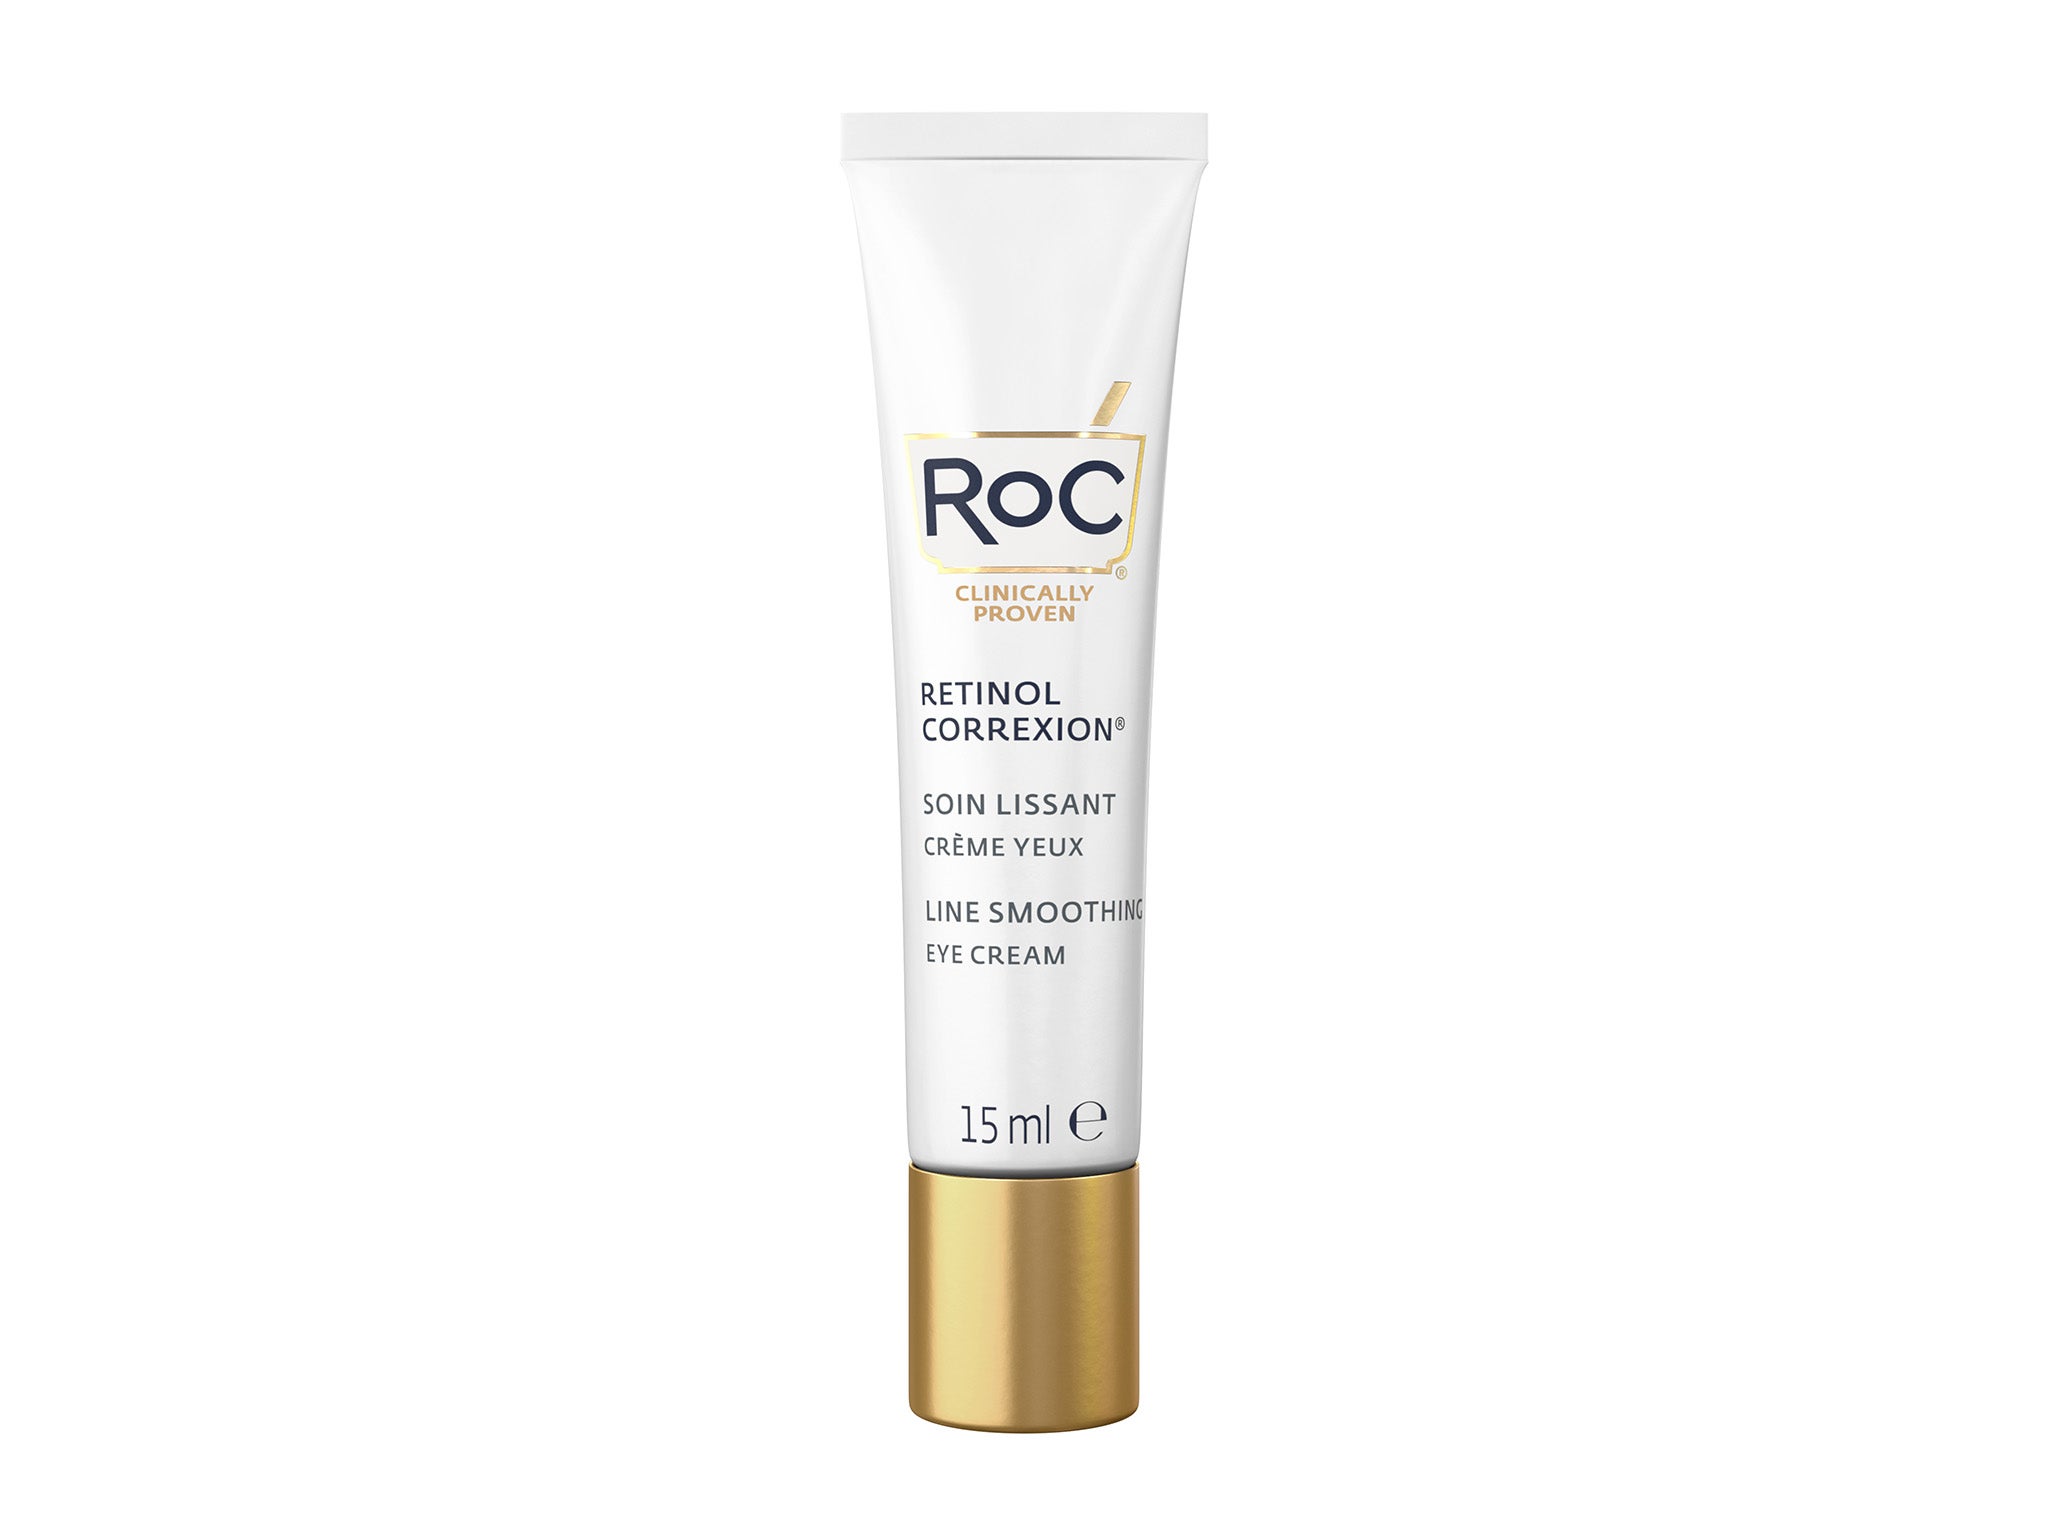 RoC retinol correxion line smoothing eye cream